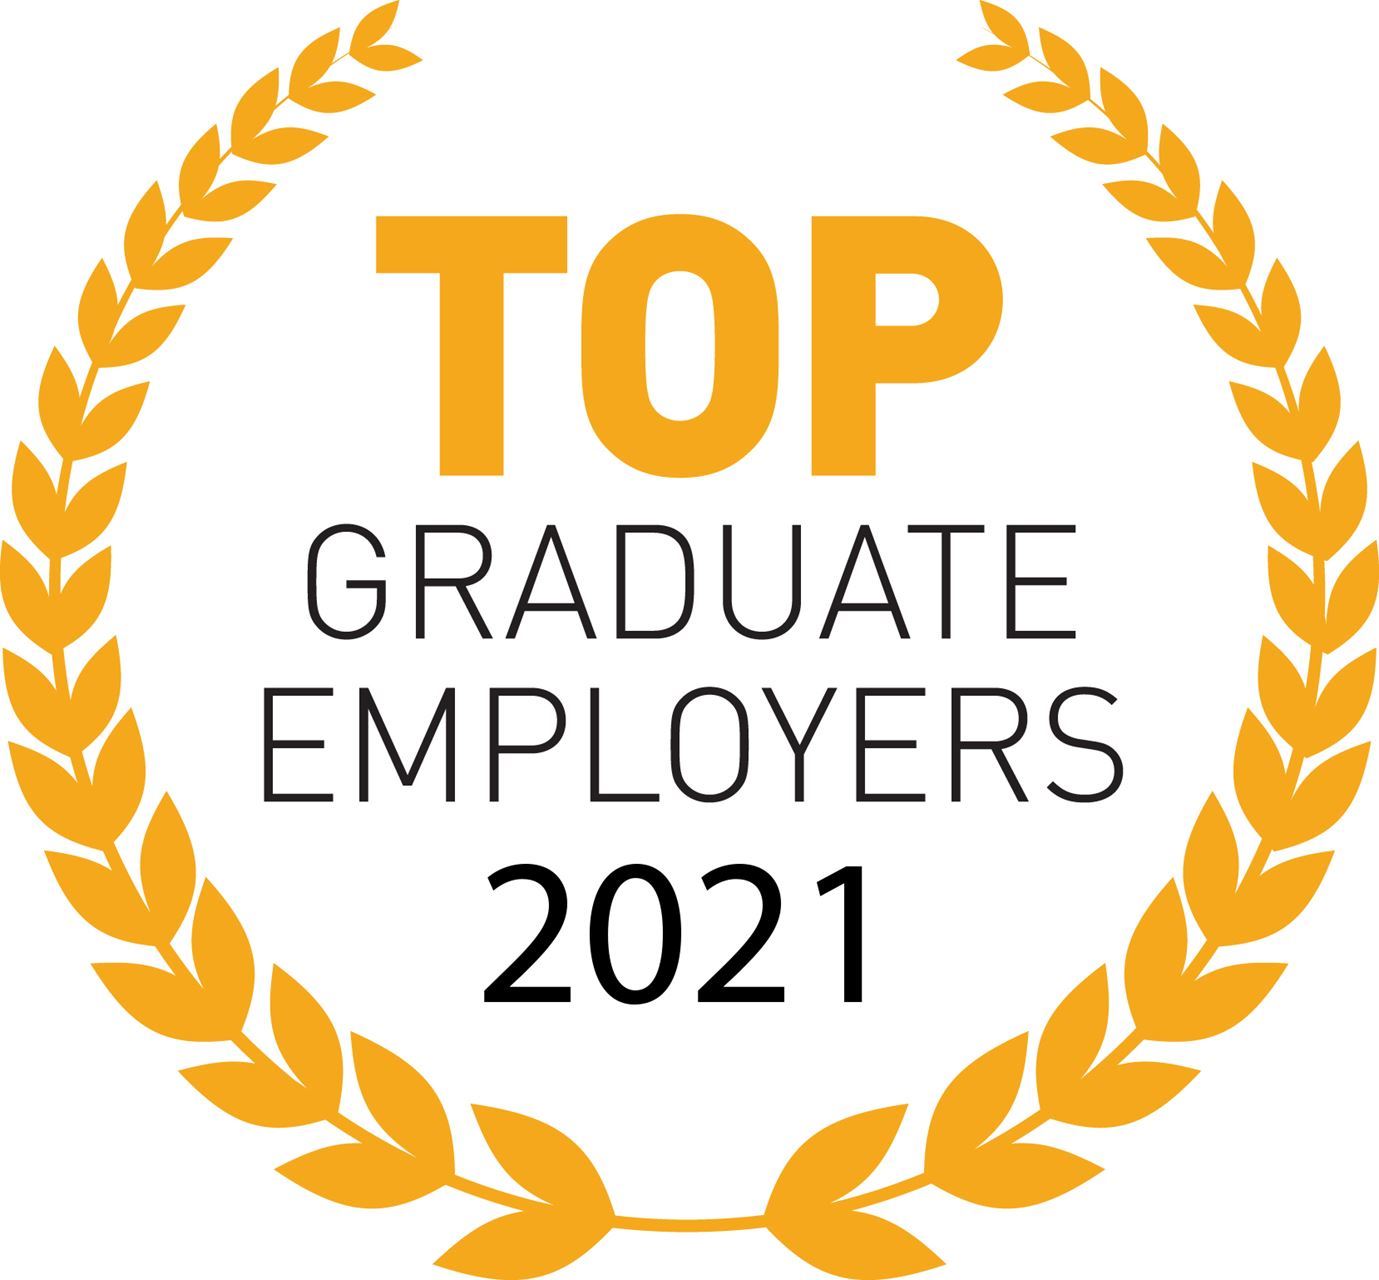 Top Graduate Employers 2021